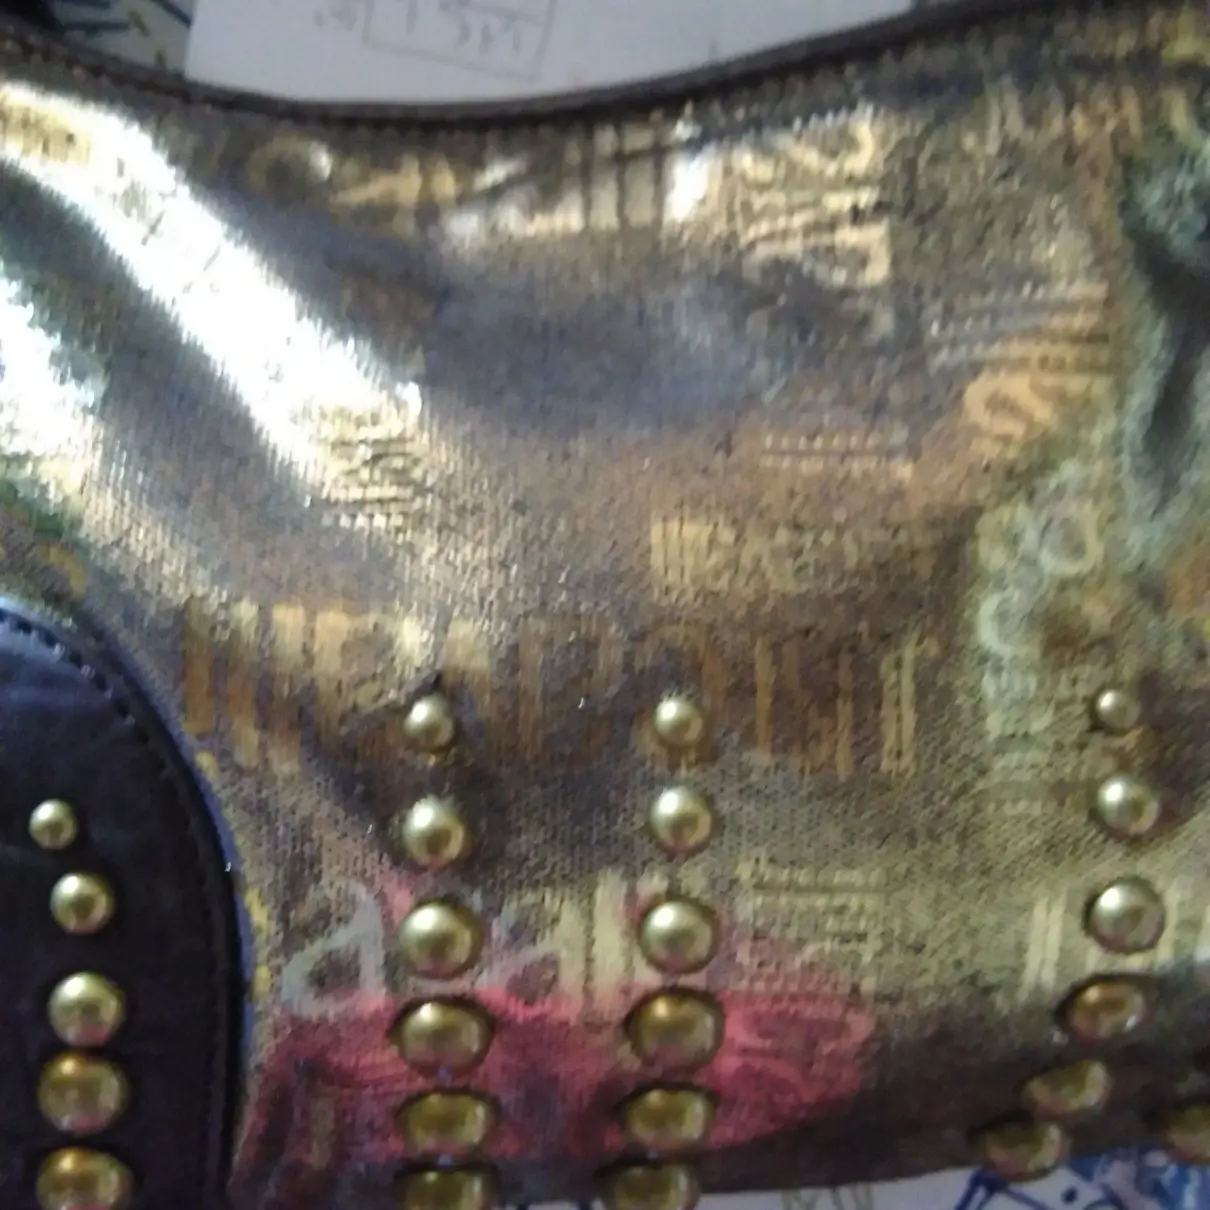 Buy Just Cavalli Leather handbag online